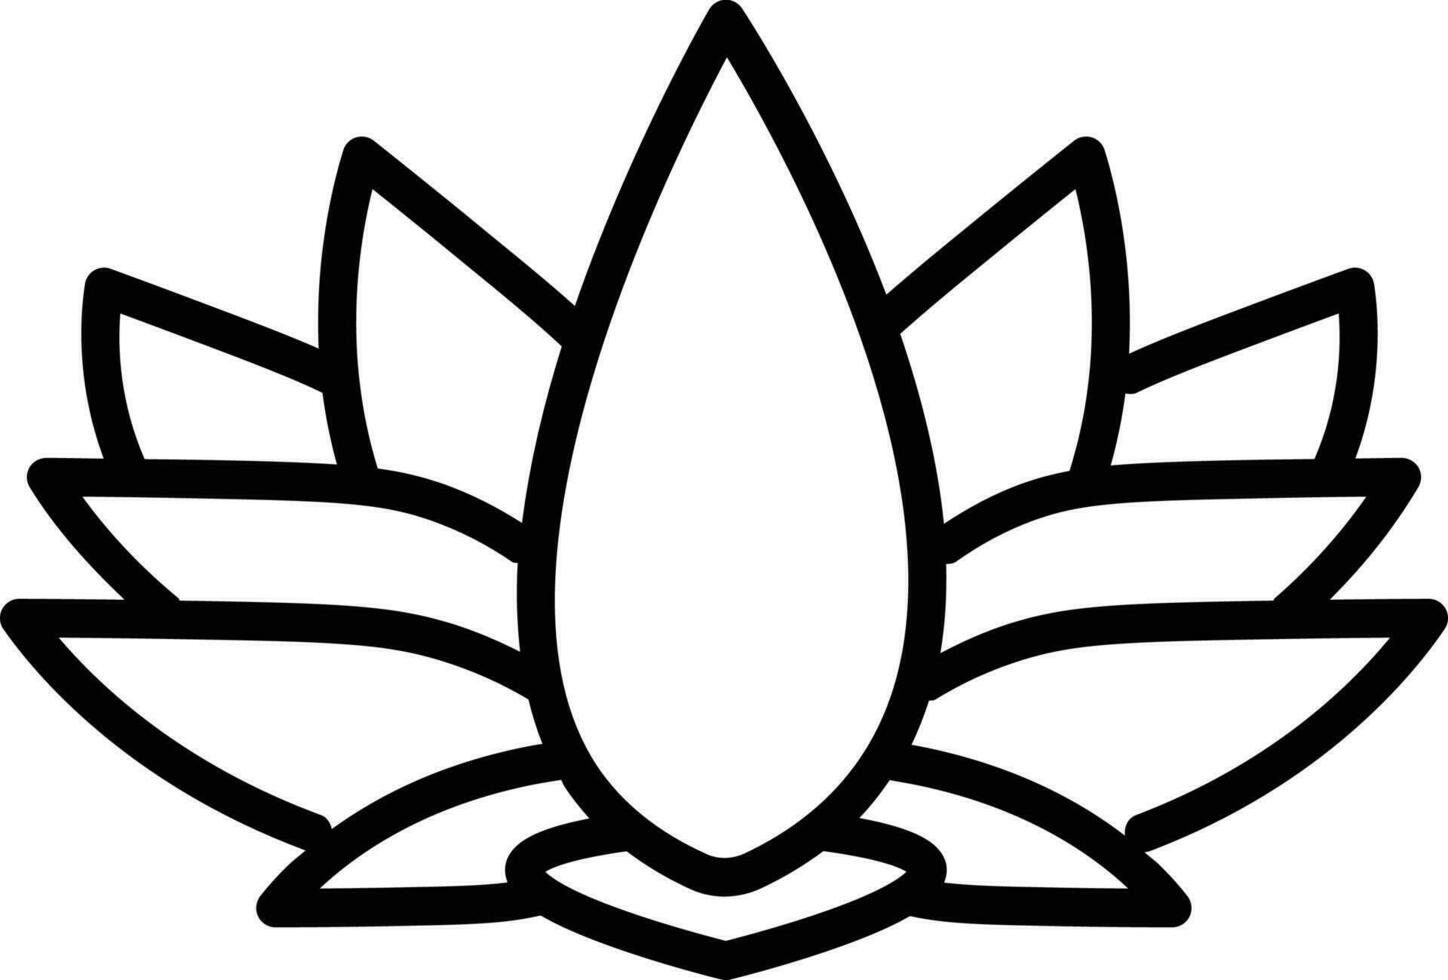 Black Line Art Lotus Flower Icon in Flat Style. vector